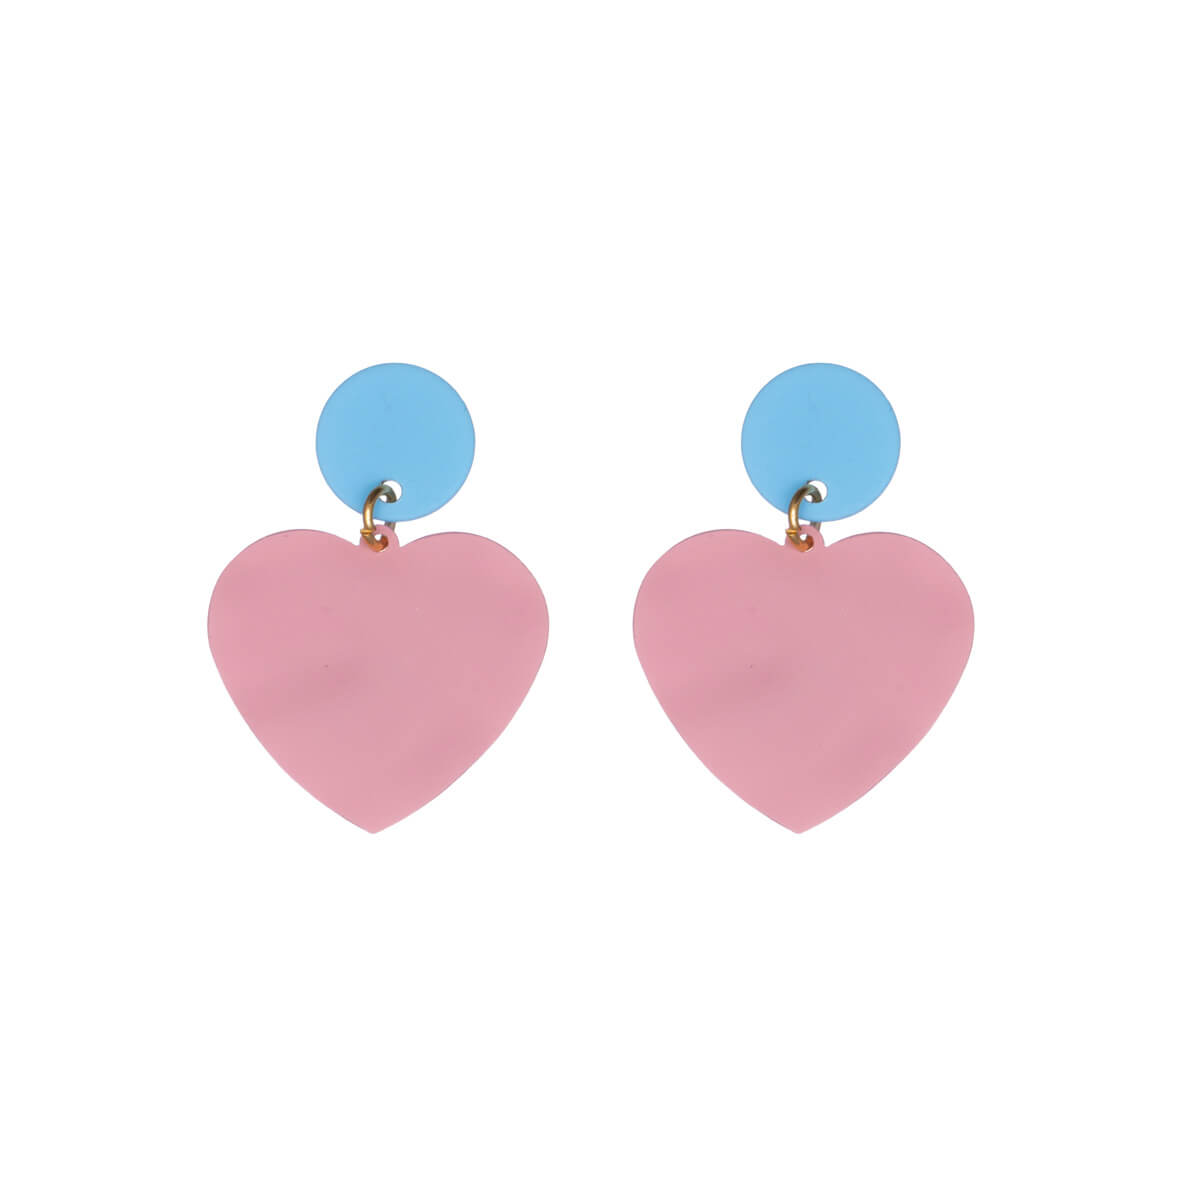 Bicoloured heart earrings